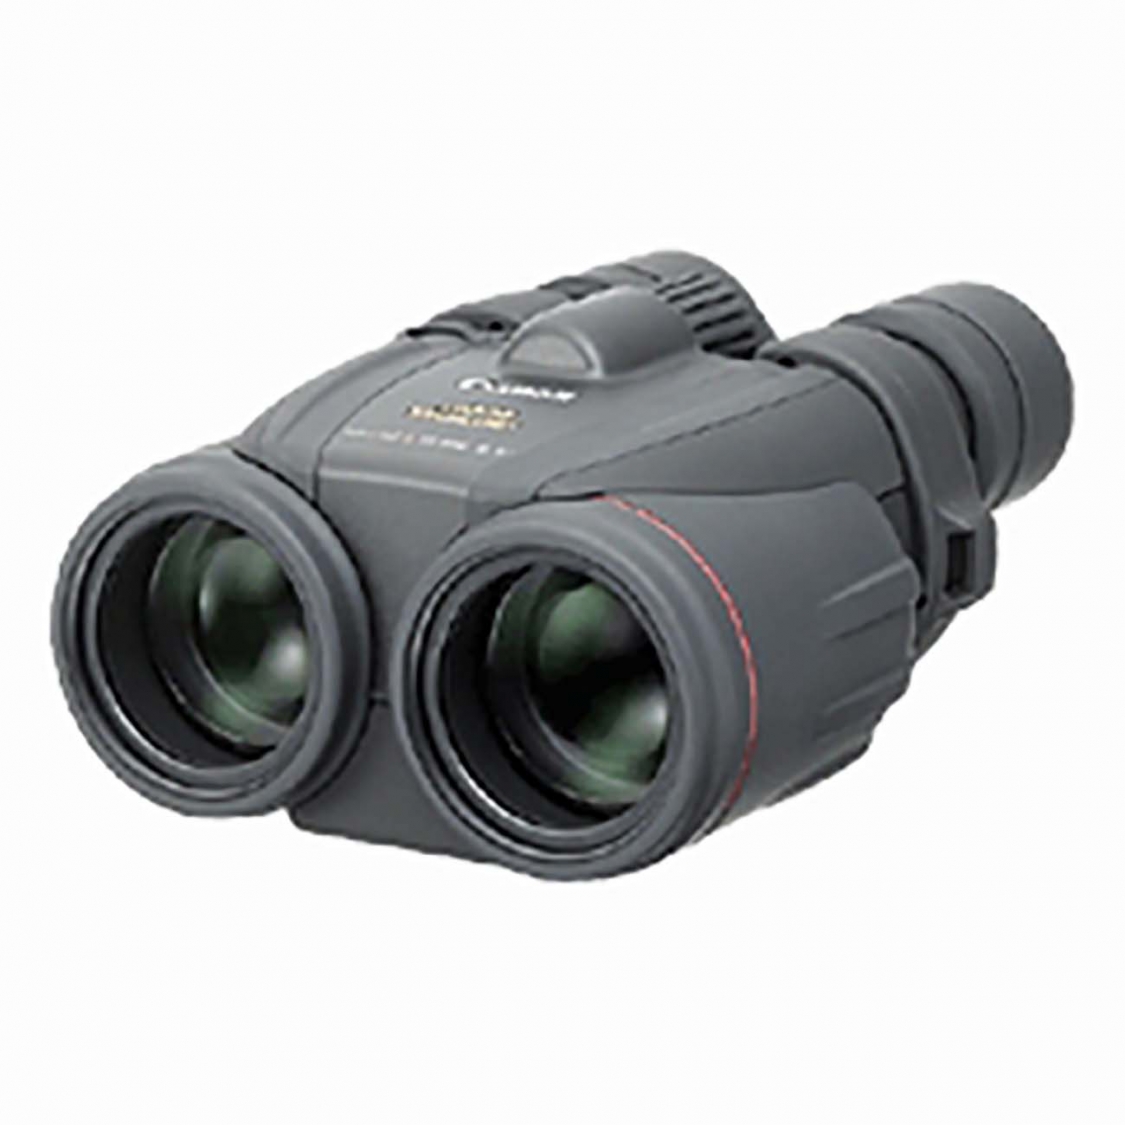 Canon 10x42L IS (Image Stabilizer) Binoculars